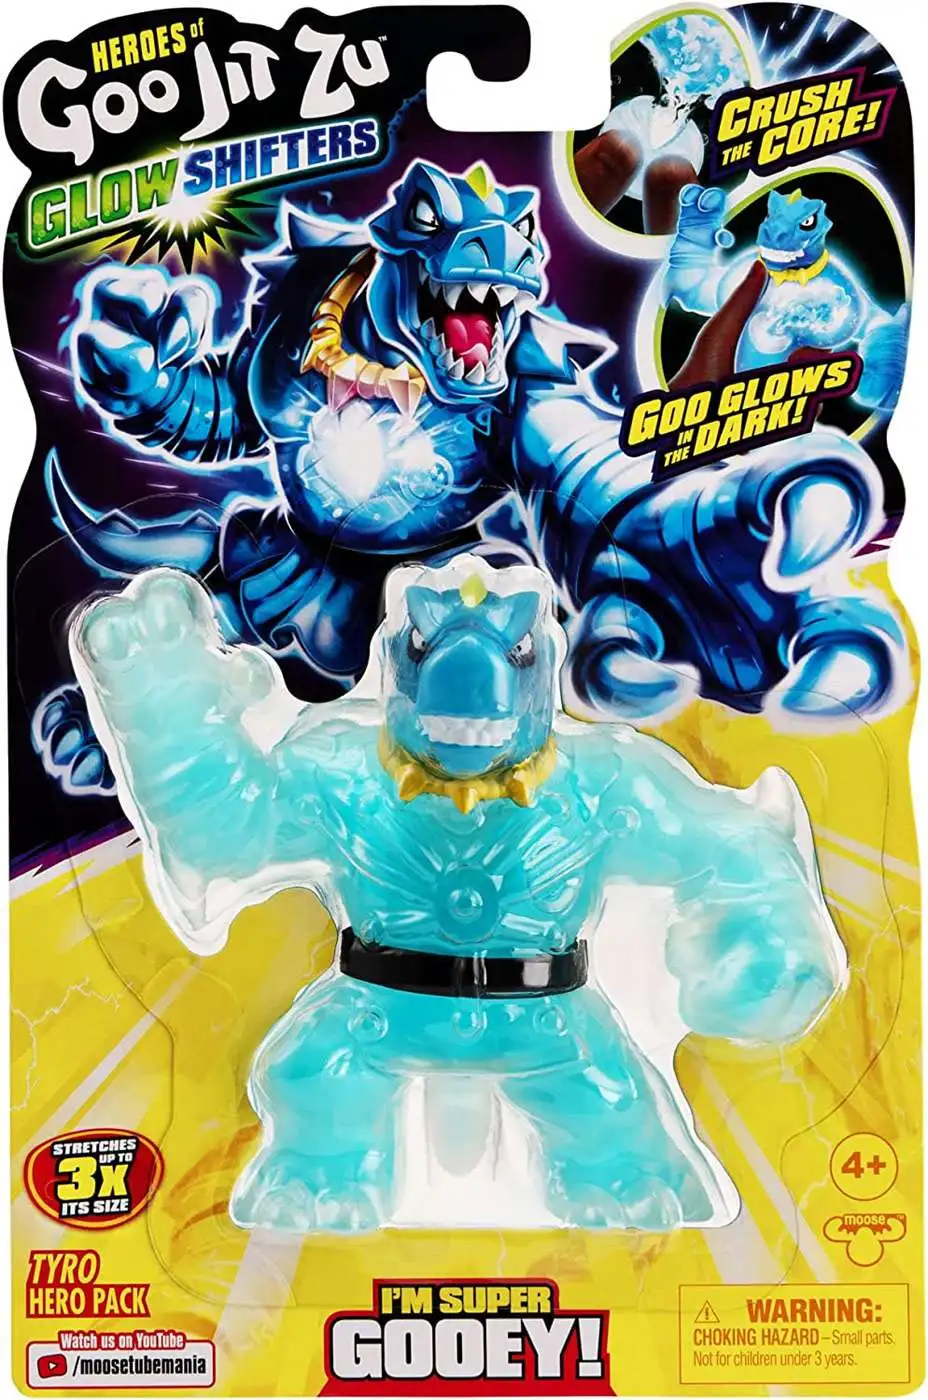 GooJitZu Glow Shifters Galaxy Attack Stretchy Toys Blazagon Gigatusk Thrash  Kid Hero Christmas Gift for Kid